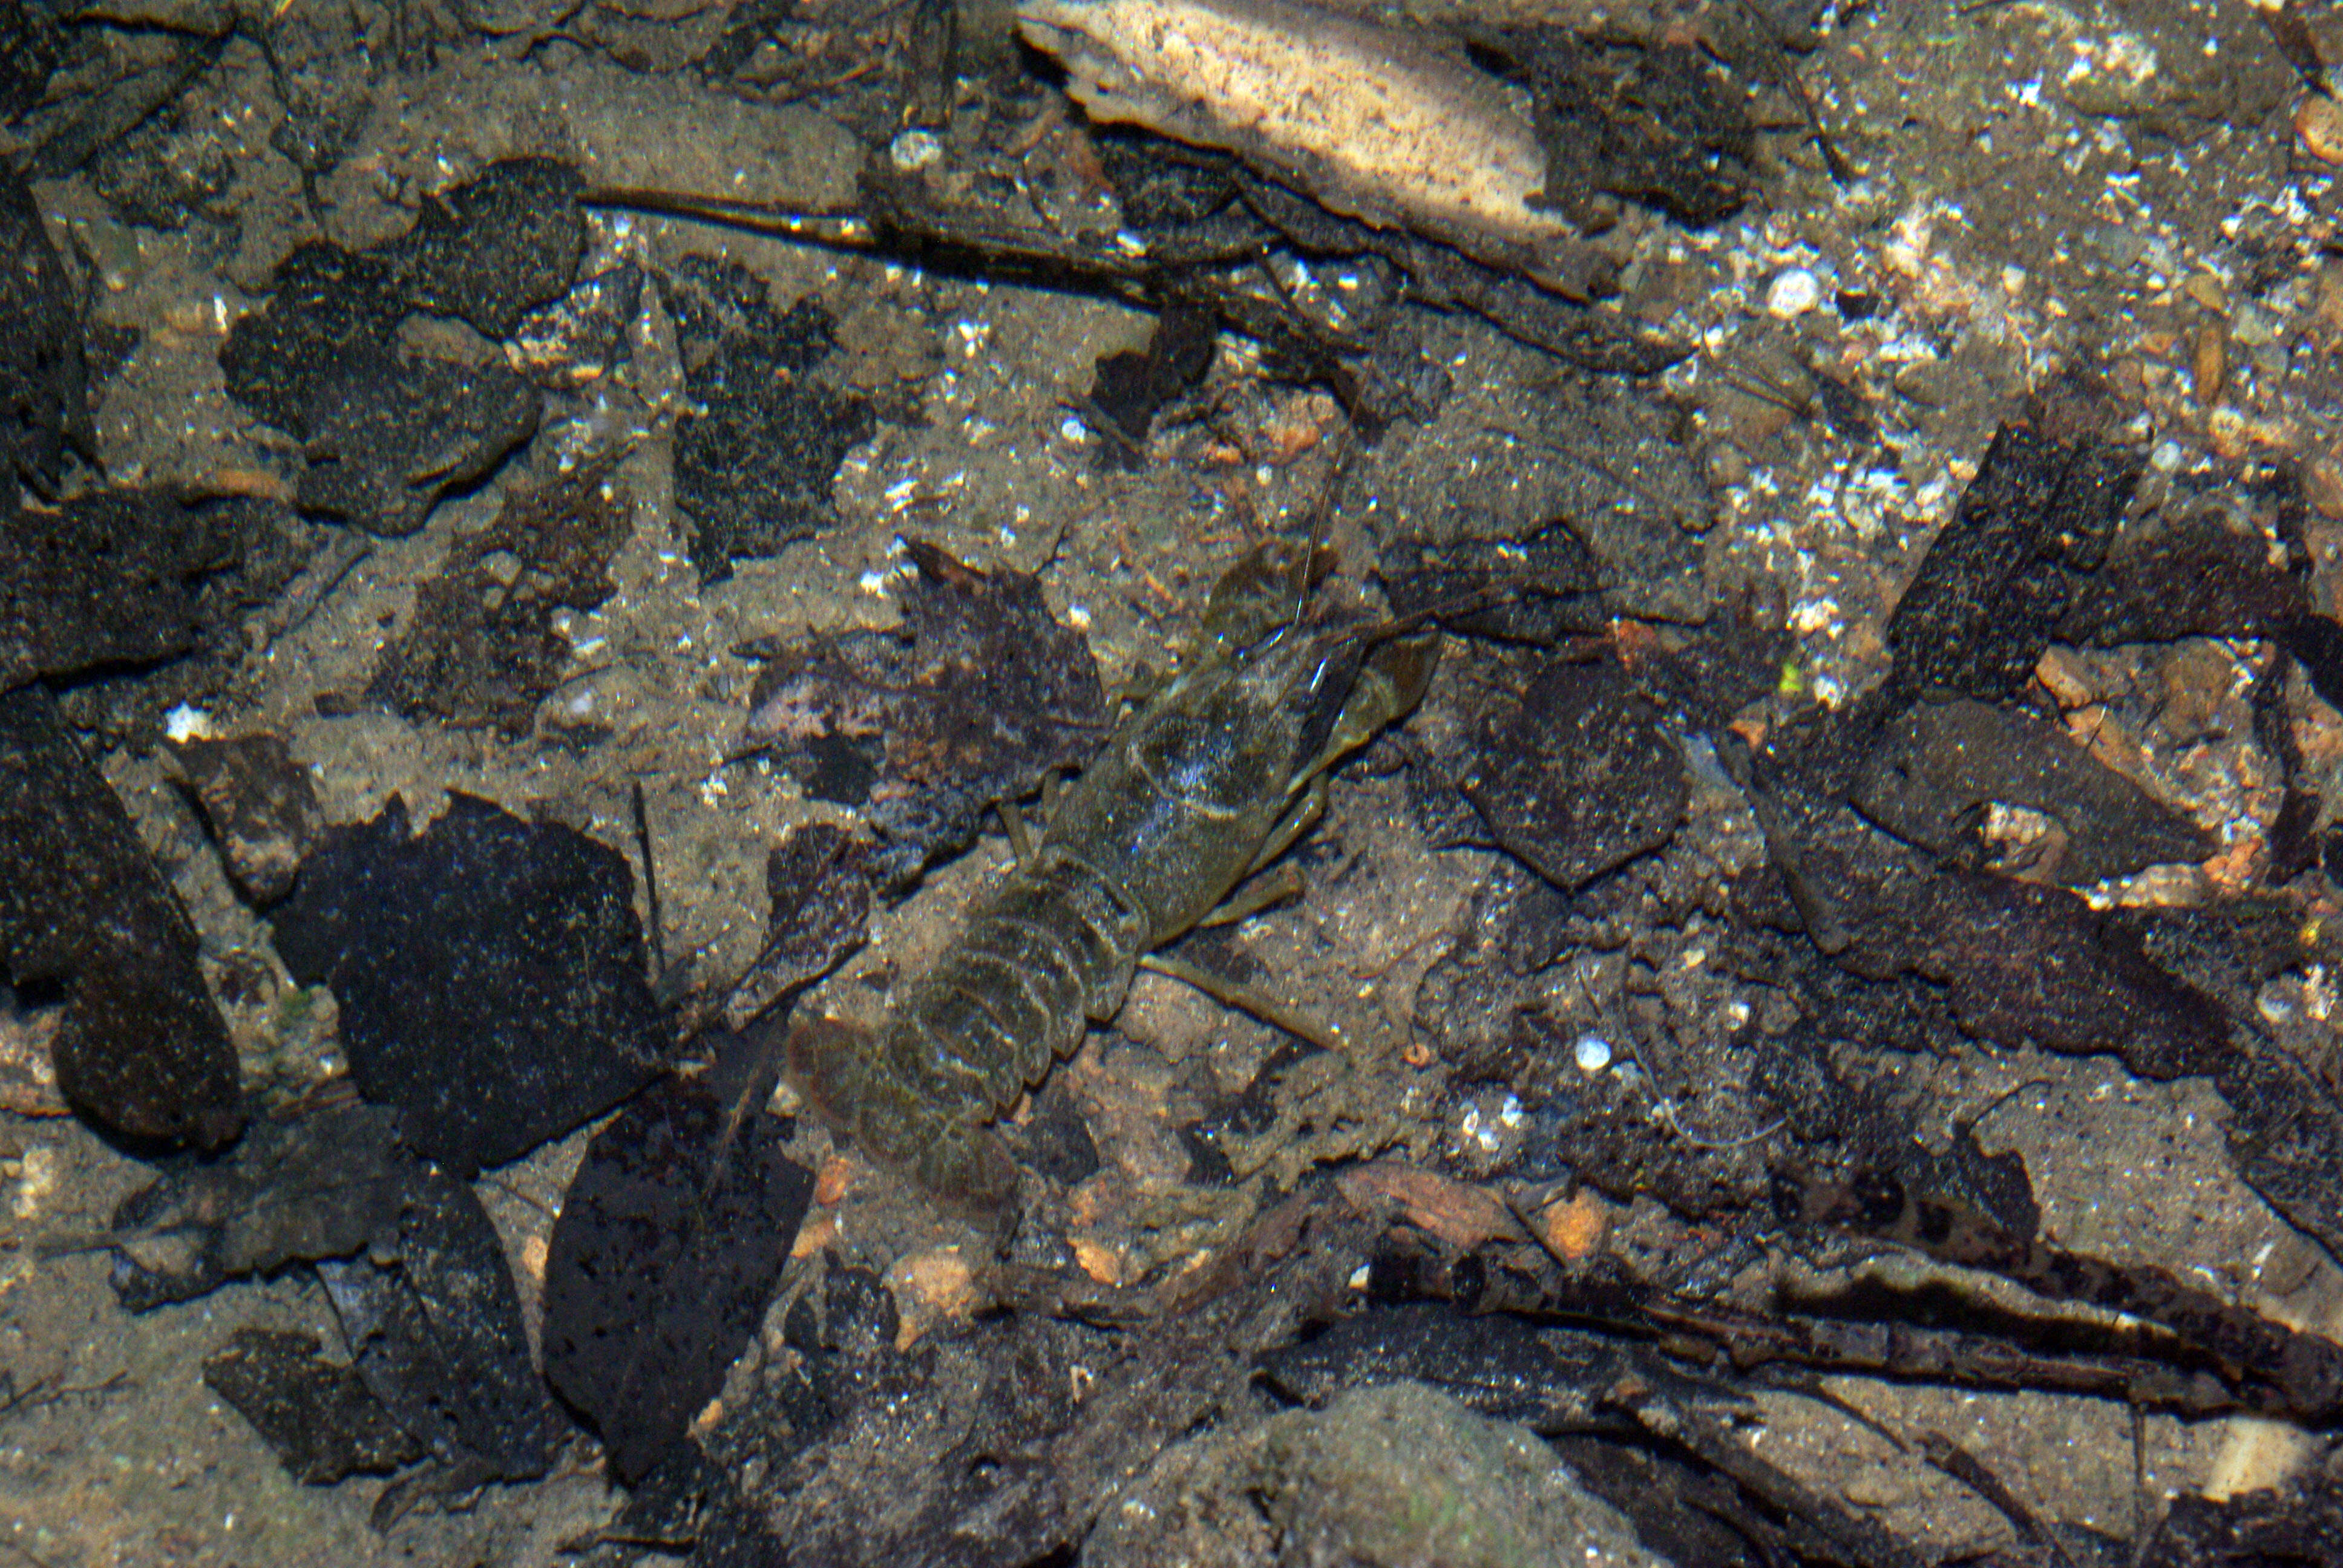 Image of Austropotamobius pallipes